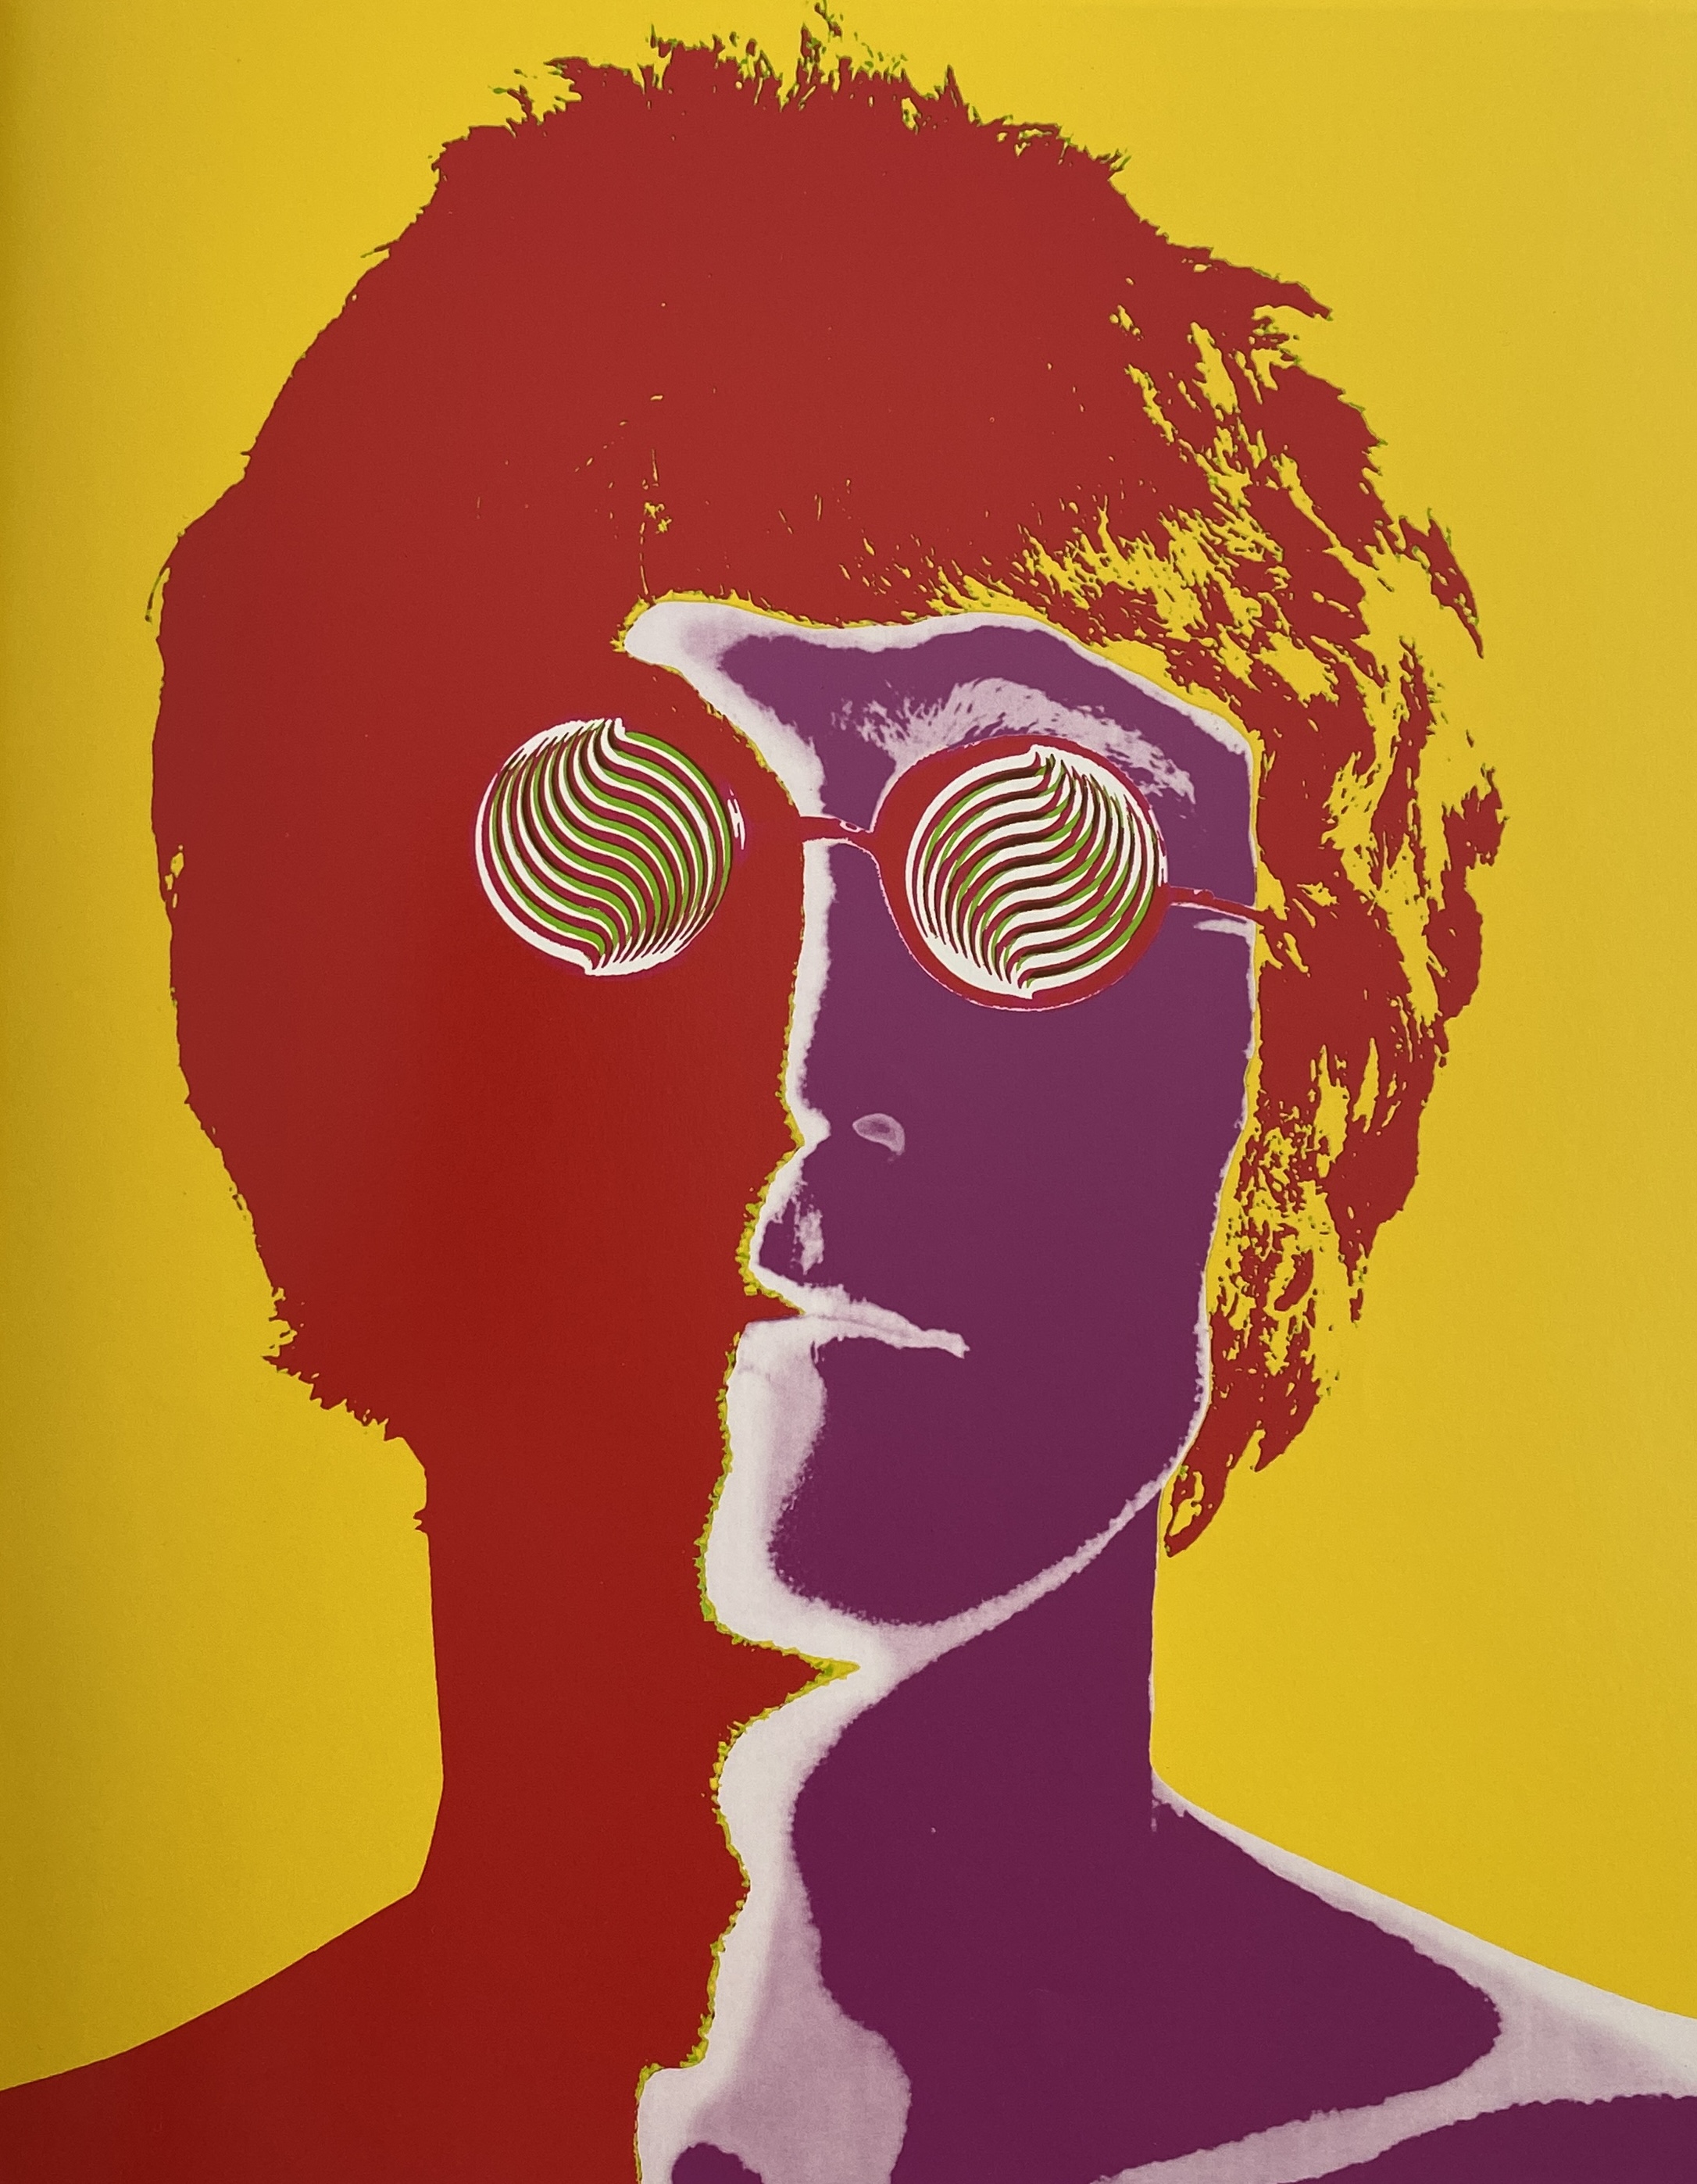 Richard Avedon - John Lennon, The Beatles